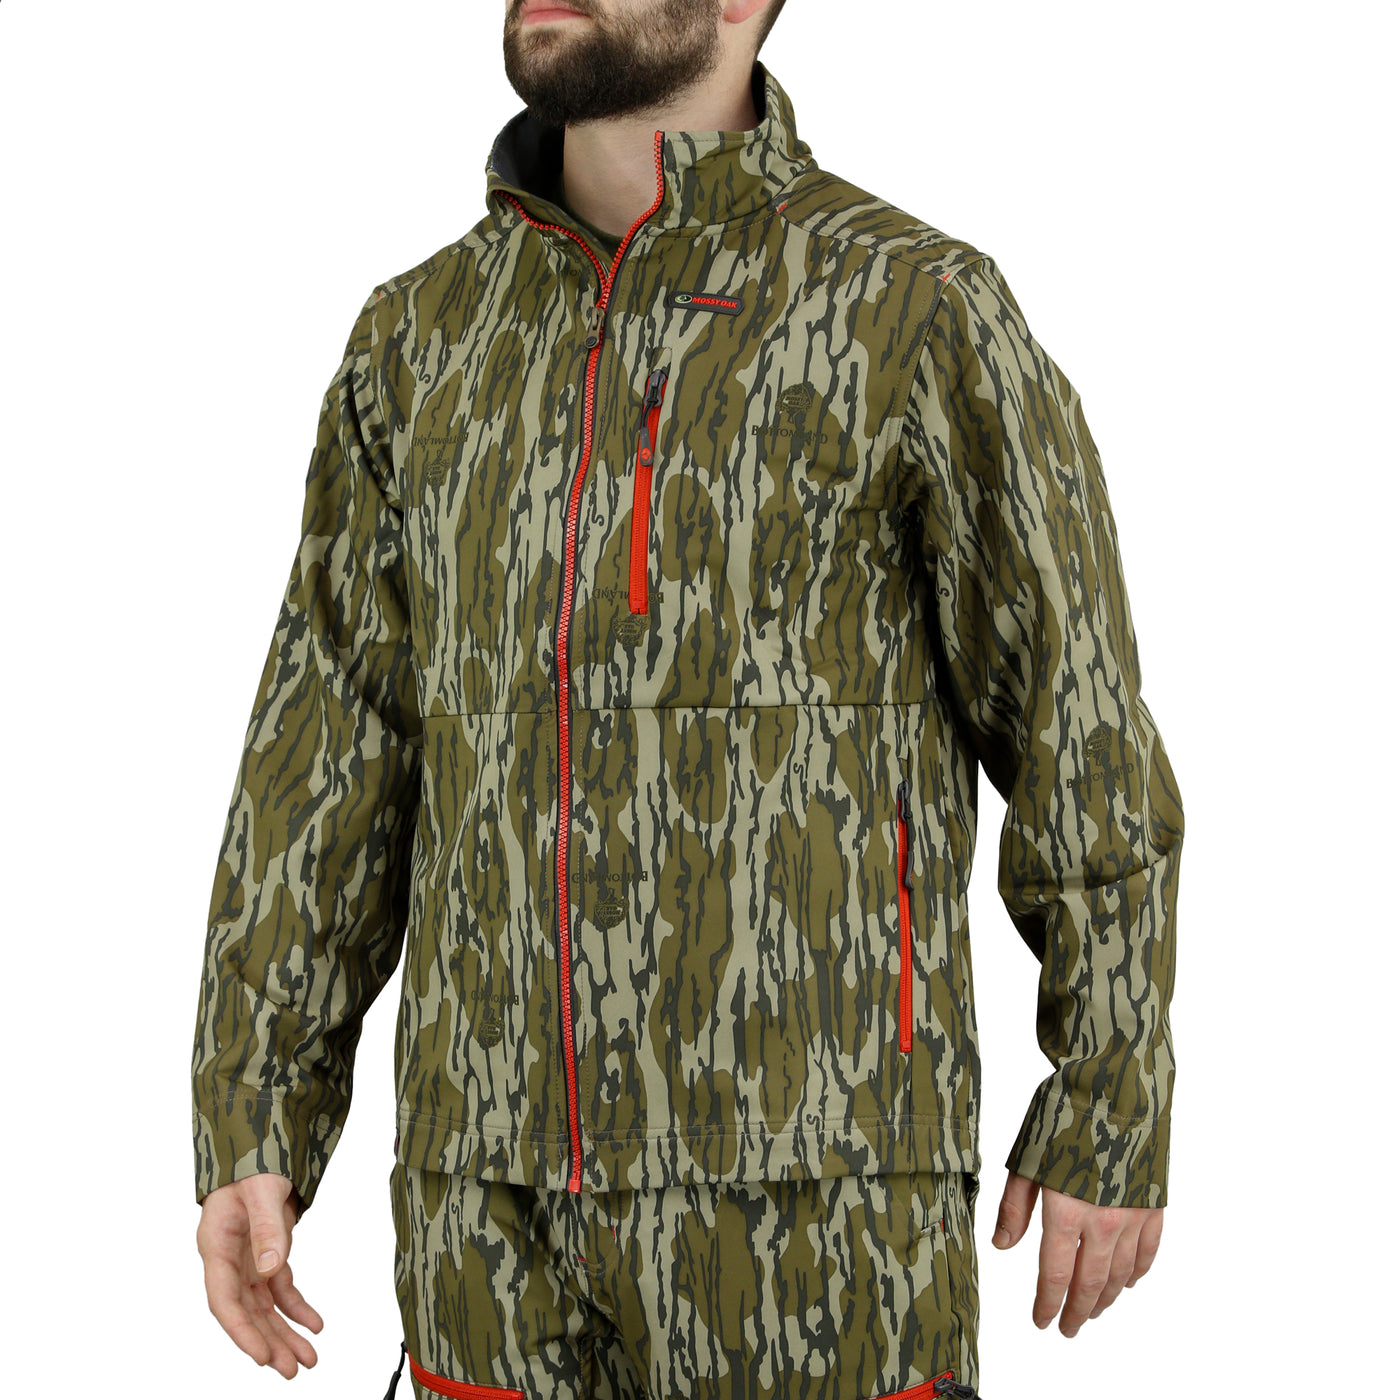 Mossy Oak Jacket Men's Medium 1/4 Zip Pullover Hunting Camo Break Up Country